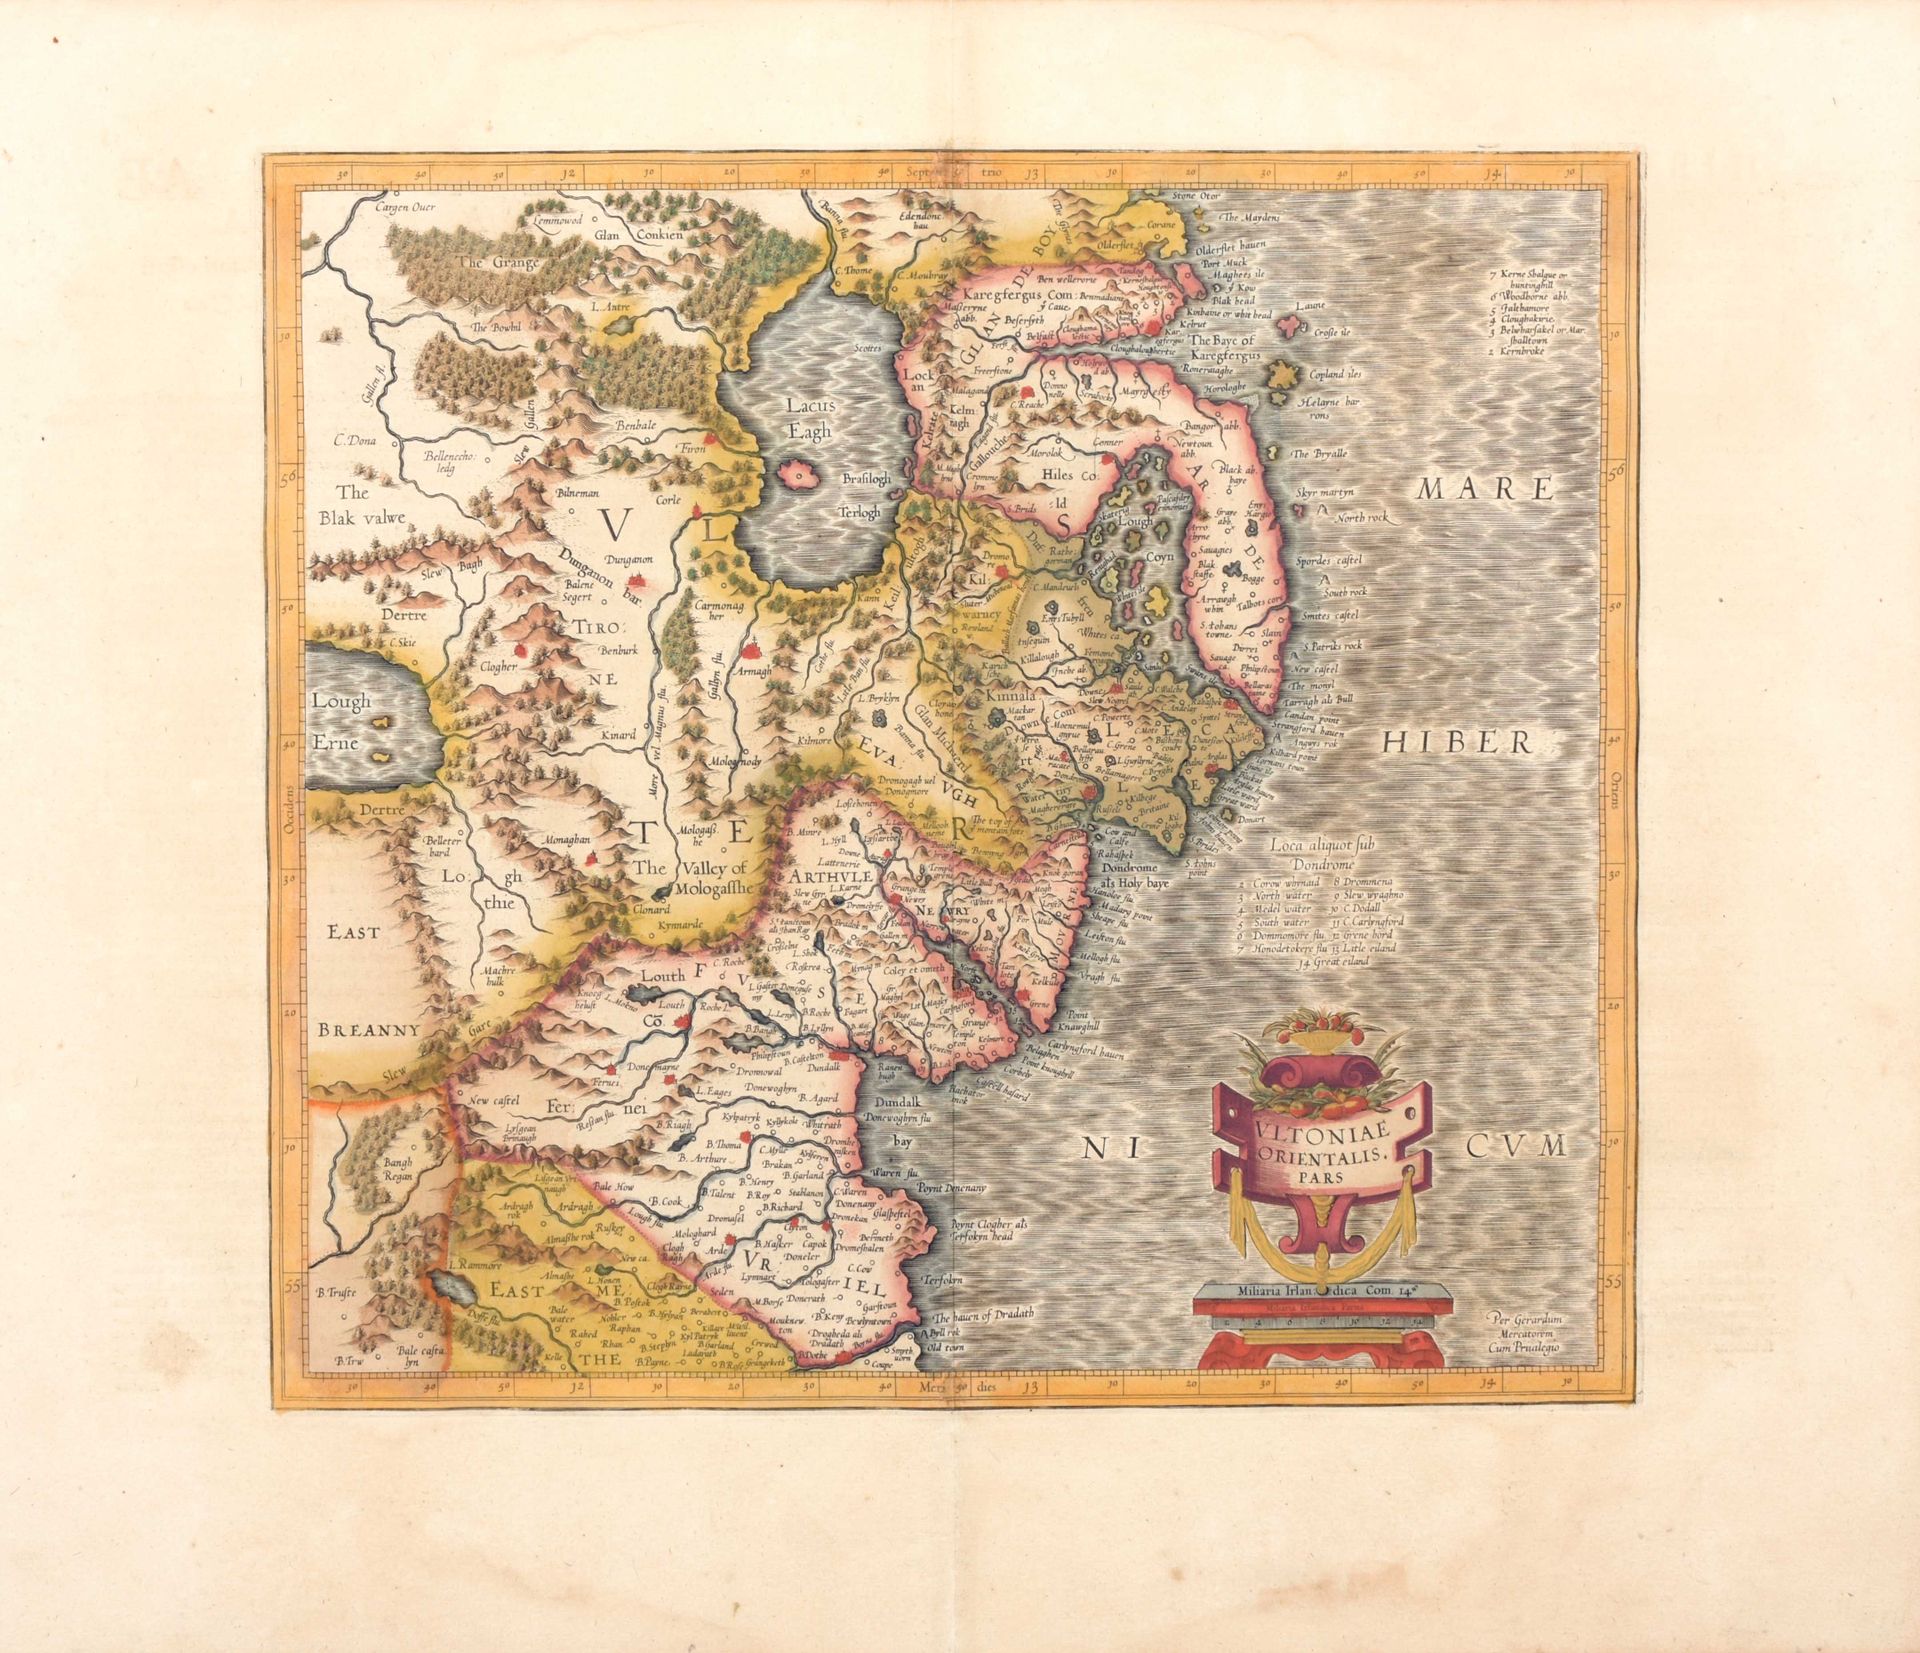 [NORTHERN IRELAND] Ultoniae Orientalis Pars

Mapa original (35 x 38 cm) de Merca&hellip;